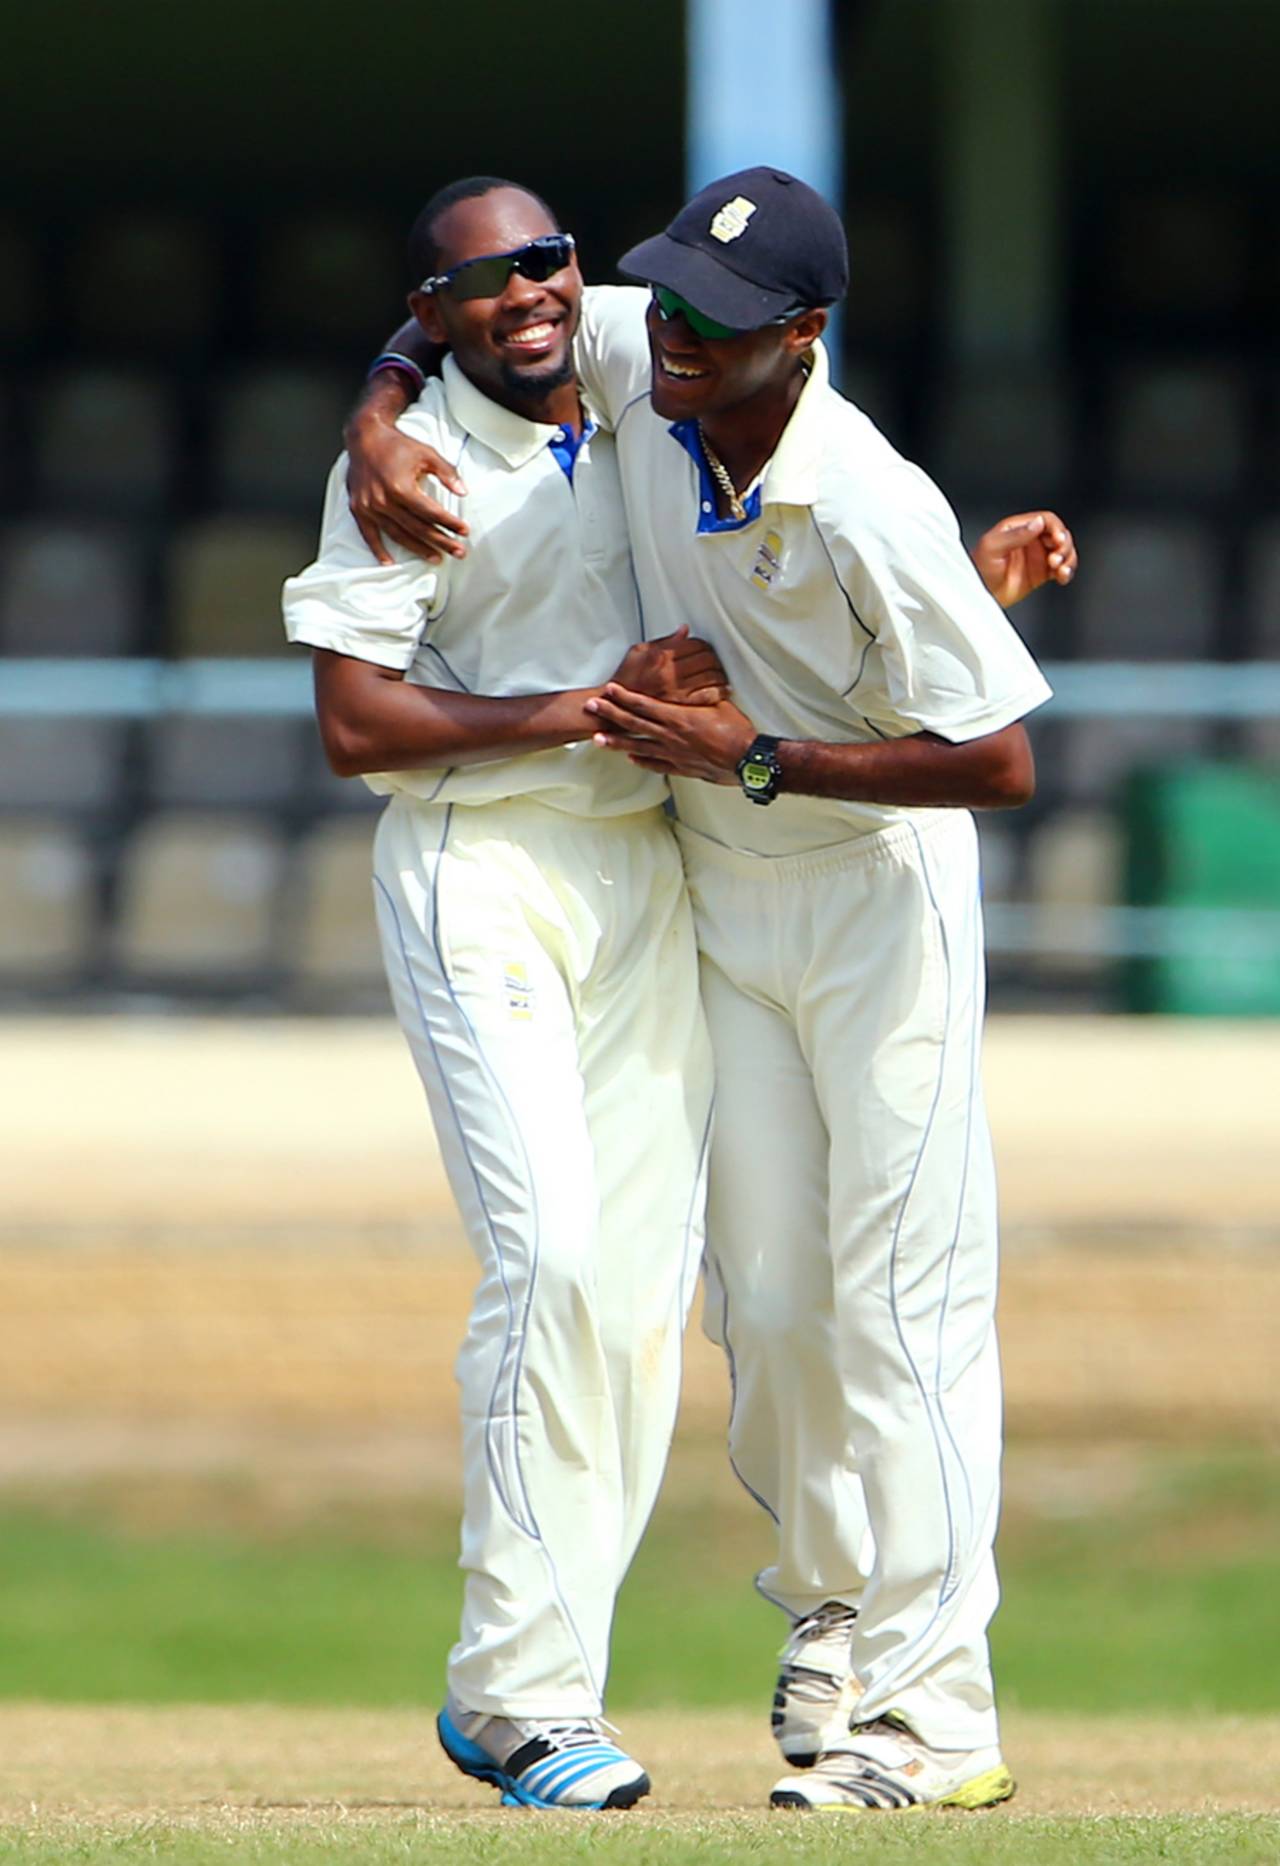 Jomel Warrican and Kraigg Brathwaite celebrate a wicket, Trinidad & Tobago v Barbados, Professional Cricket League 2014-15, Port of Spain, 3rd day, November 16, 2014